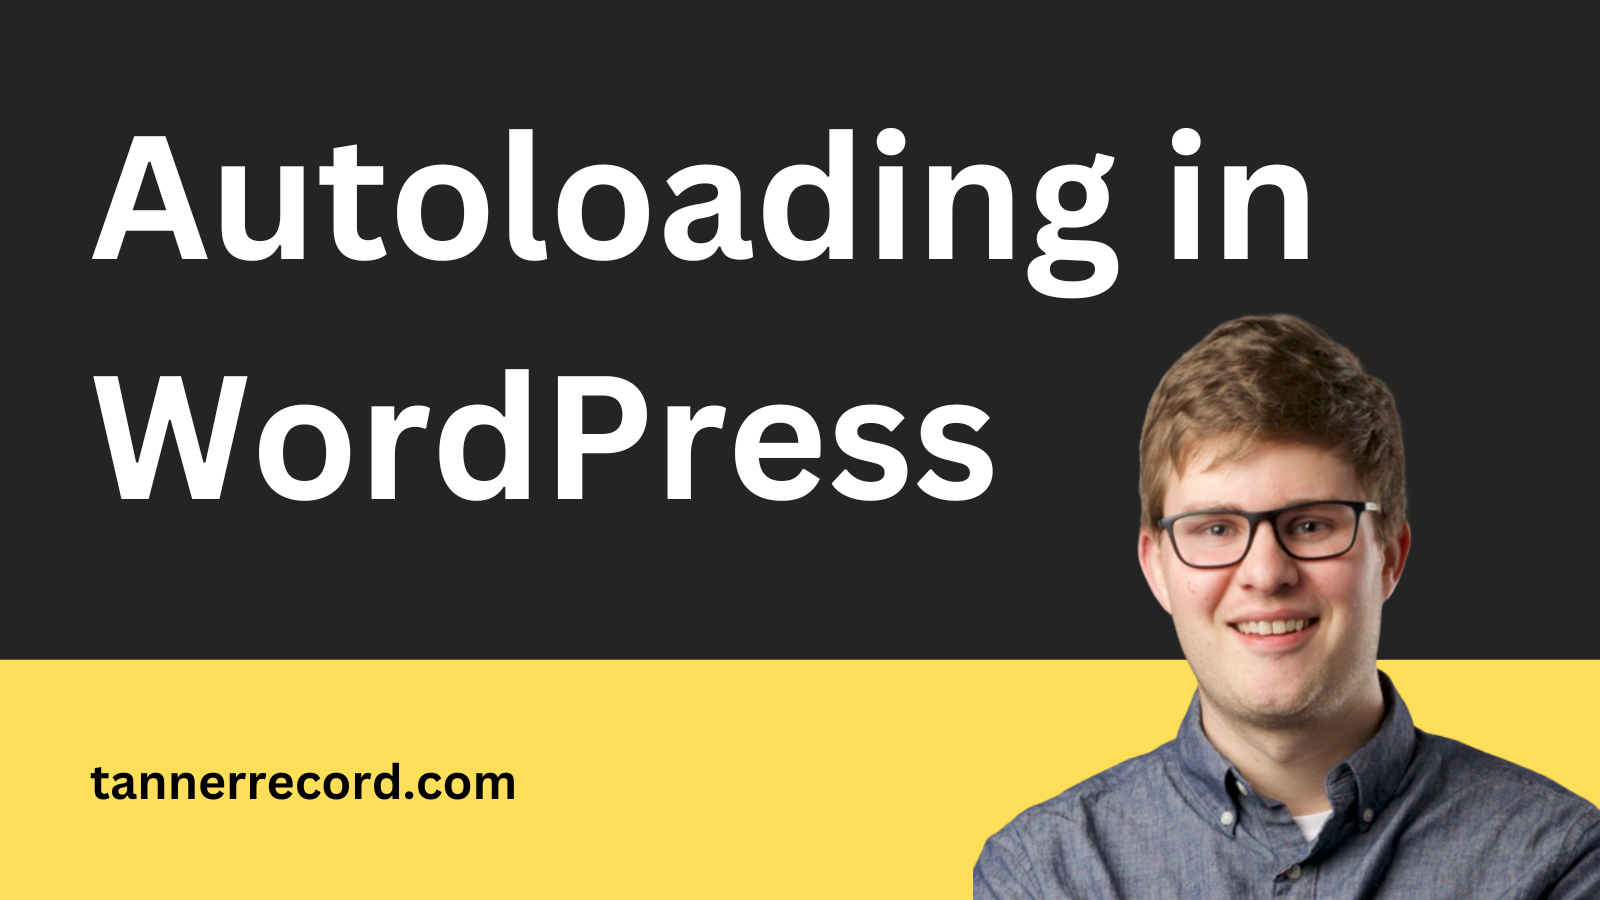 A Primer on Autoloading in WordPress